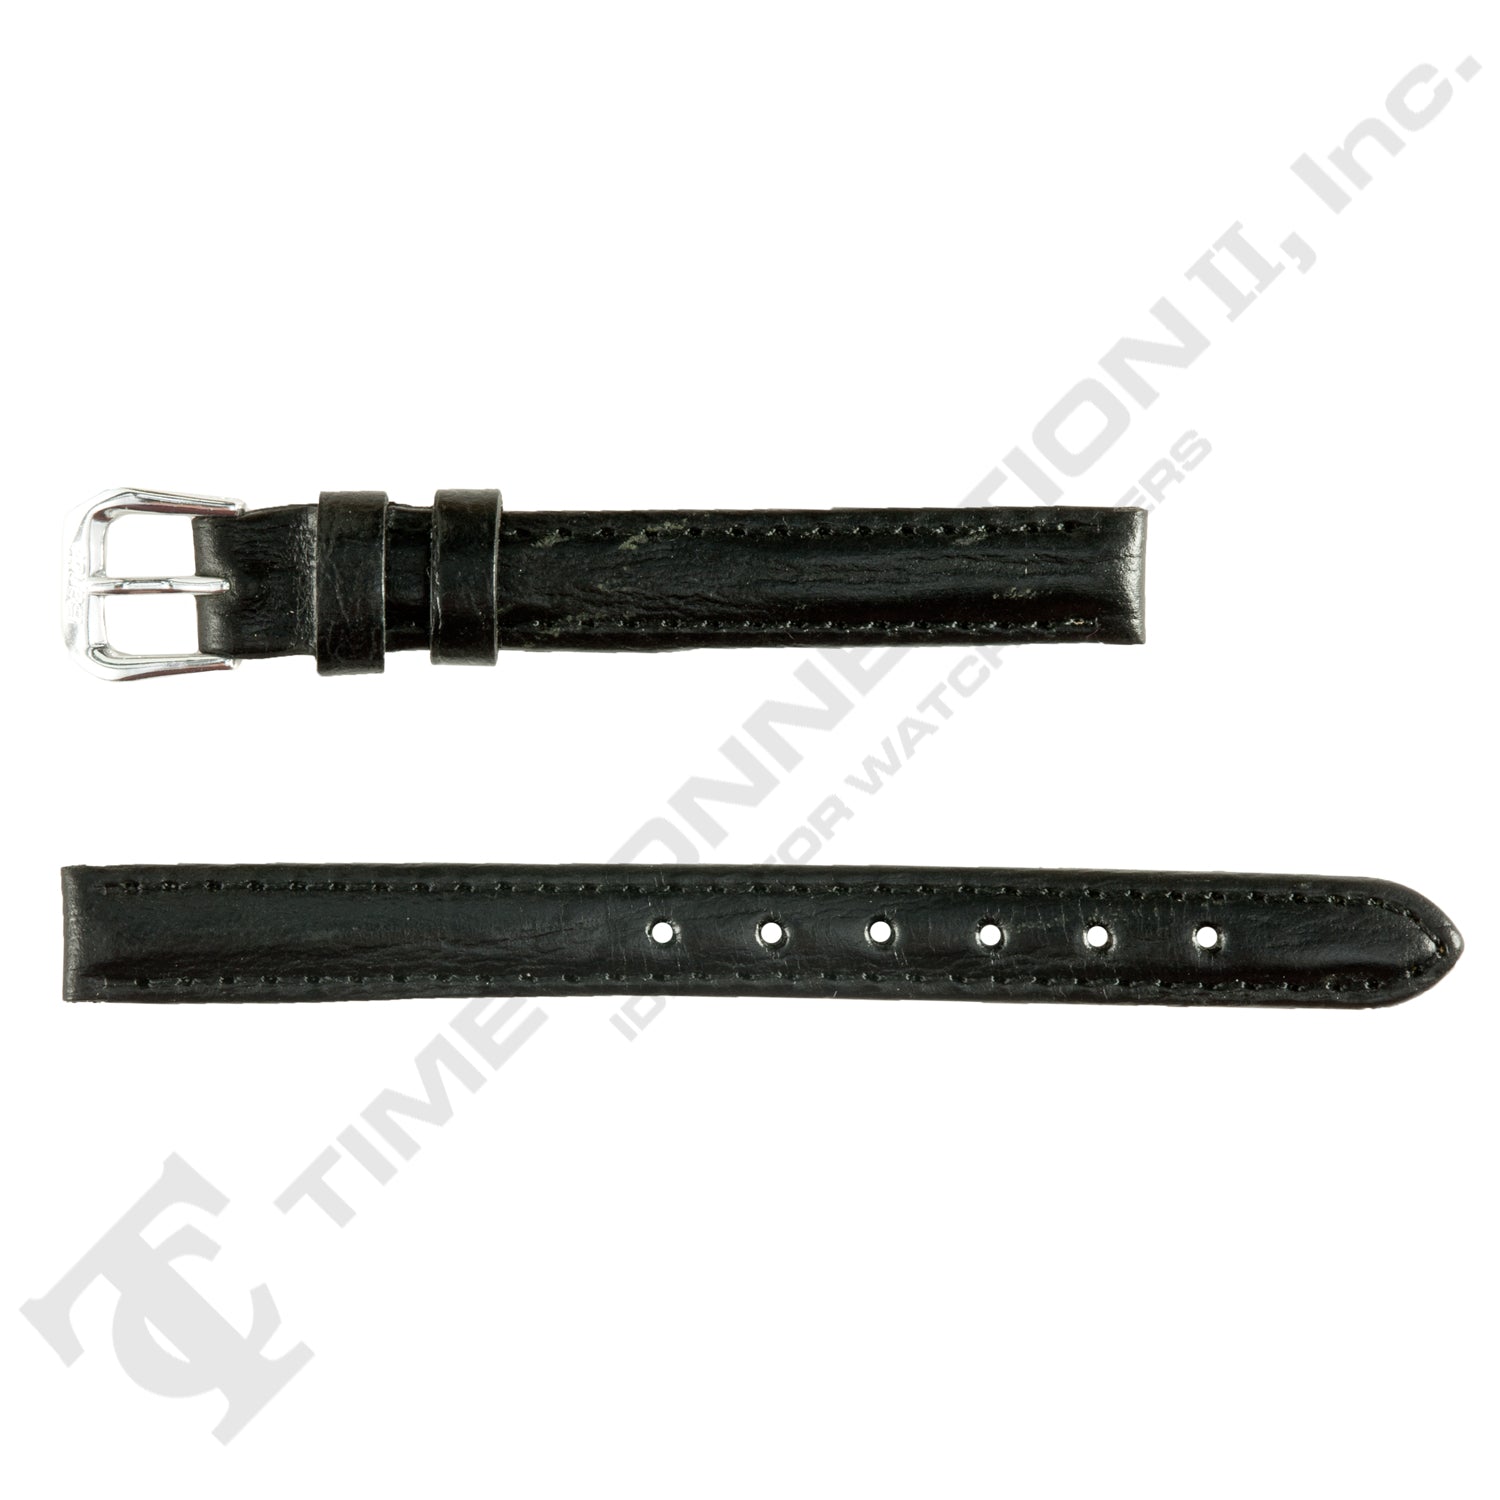 Banda No. 303 Smooth Bark Fine Leather Straps (10mm - 20mm)